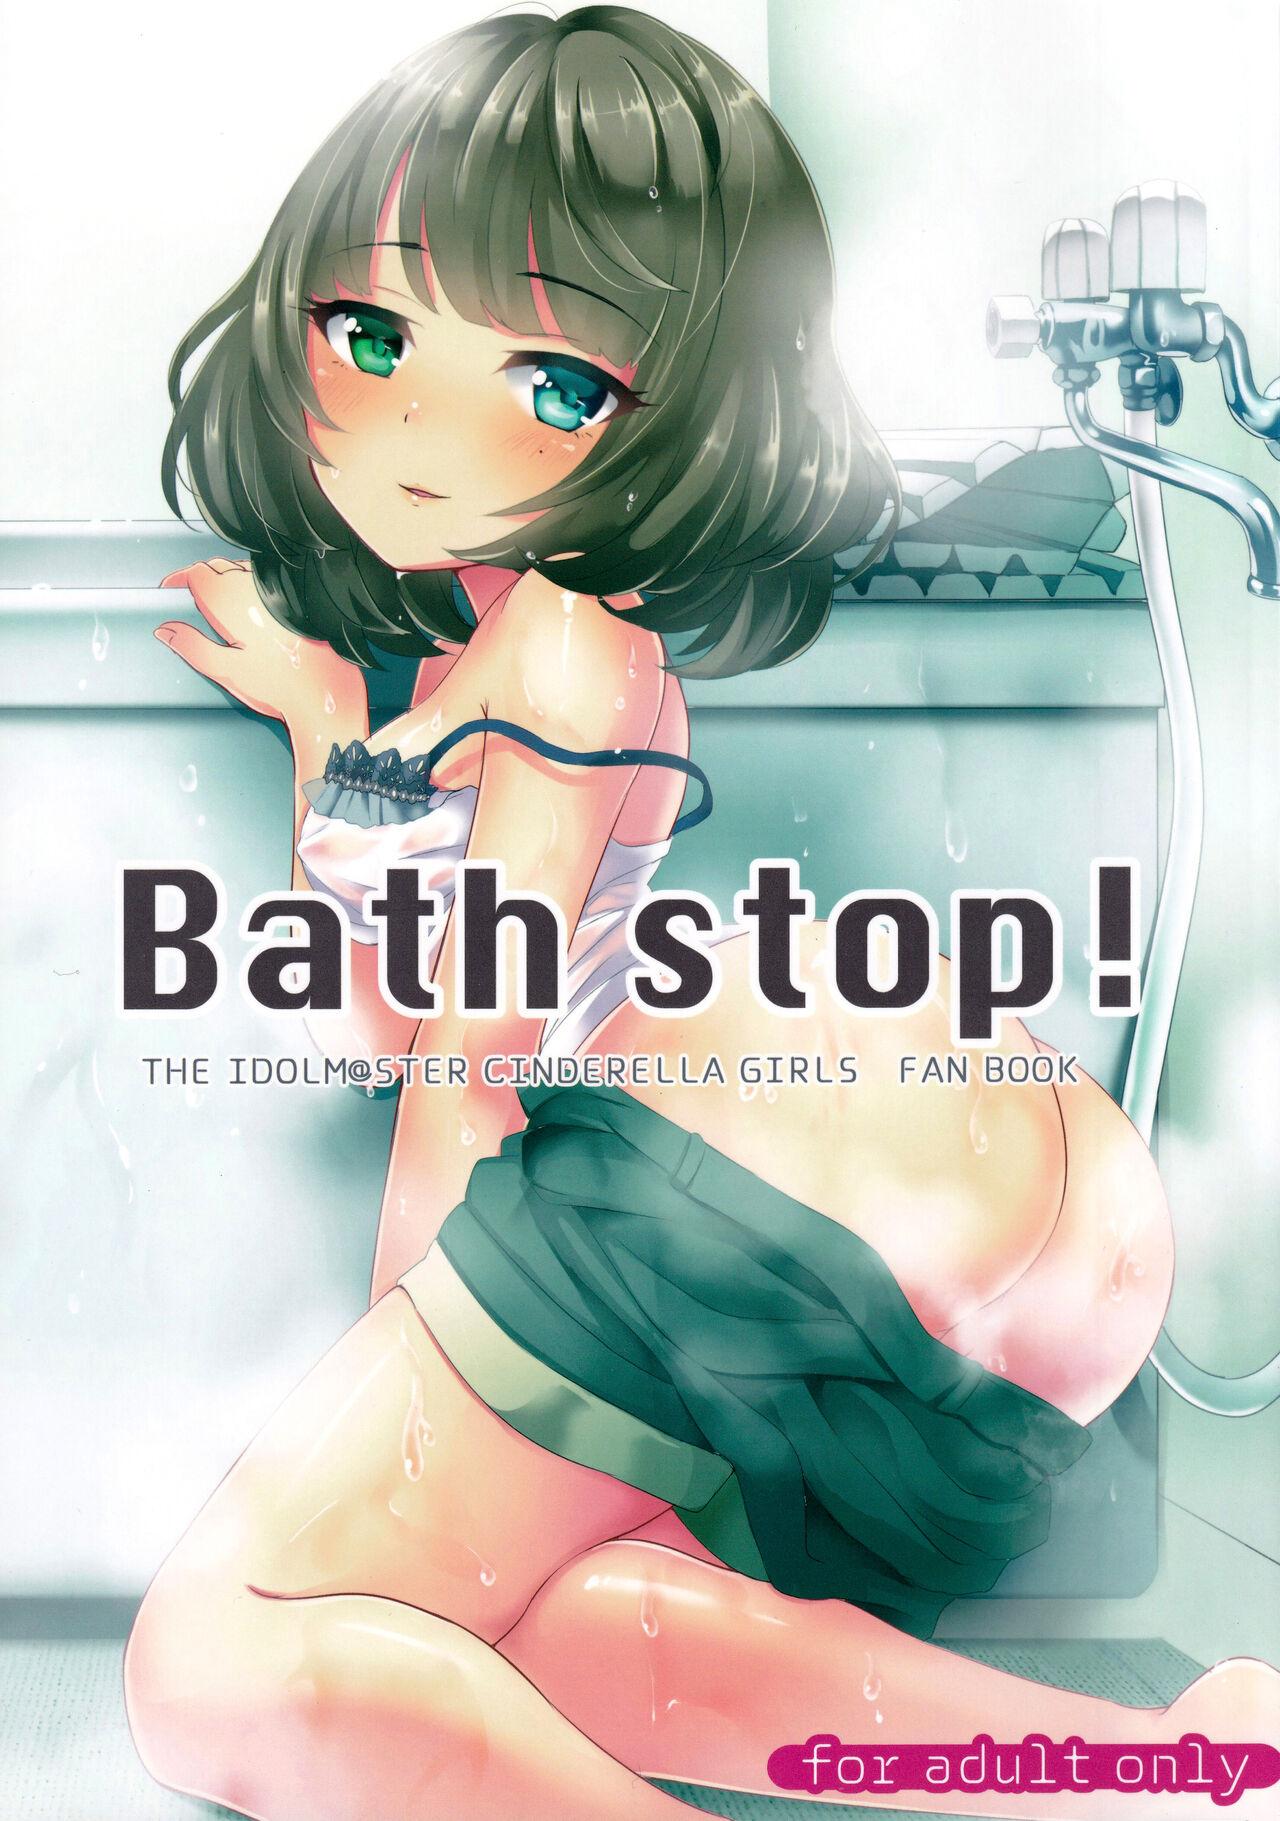 Bath stop! 0